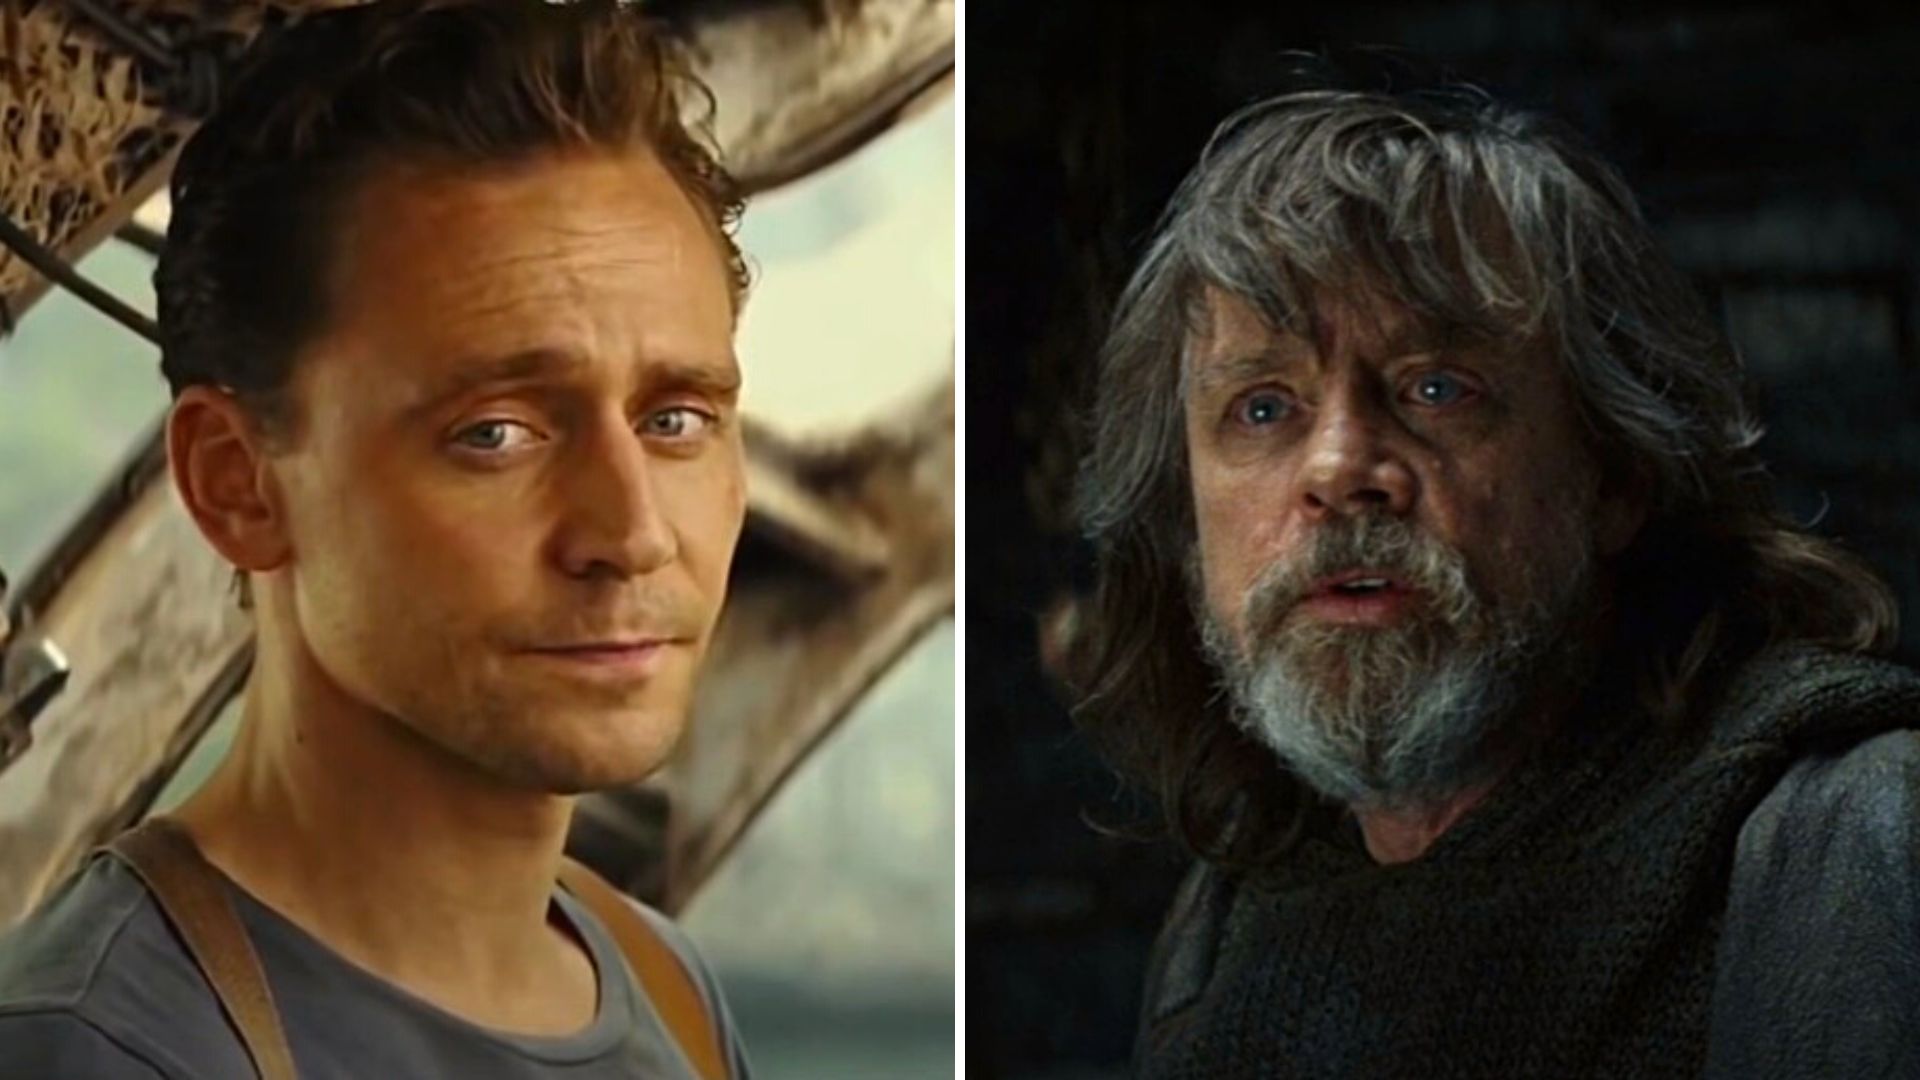 Mark Hamill et Tom Hiddleston dans une prochaine adaptation de Stephen King